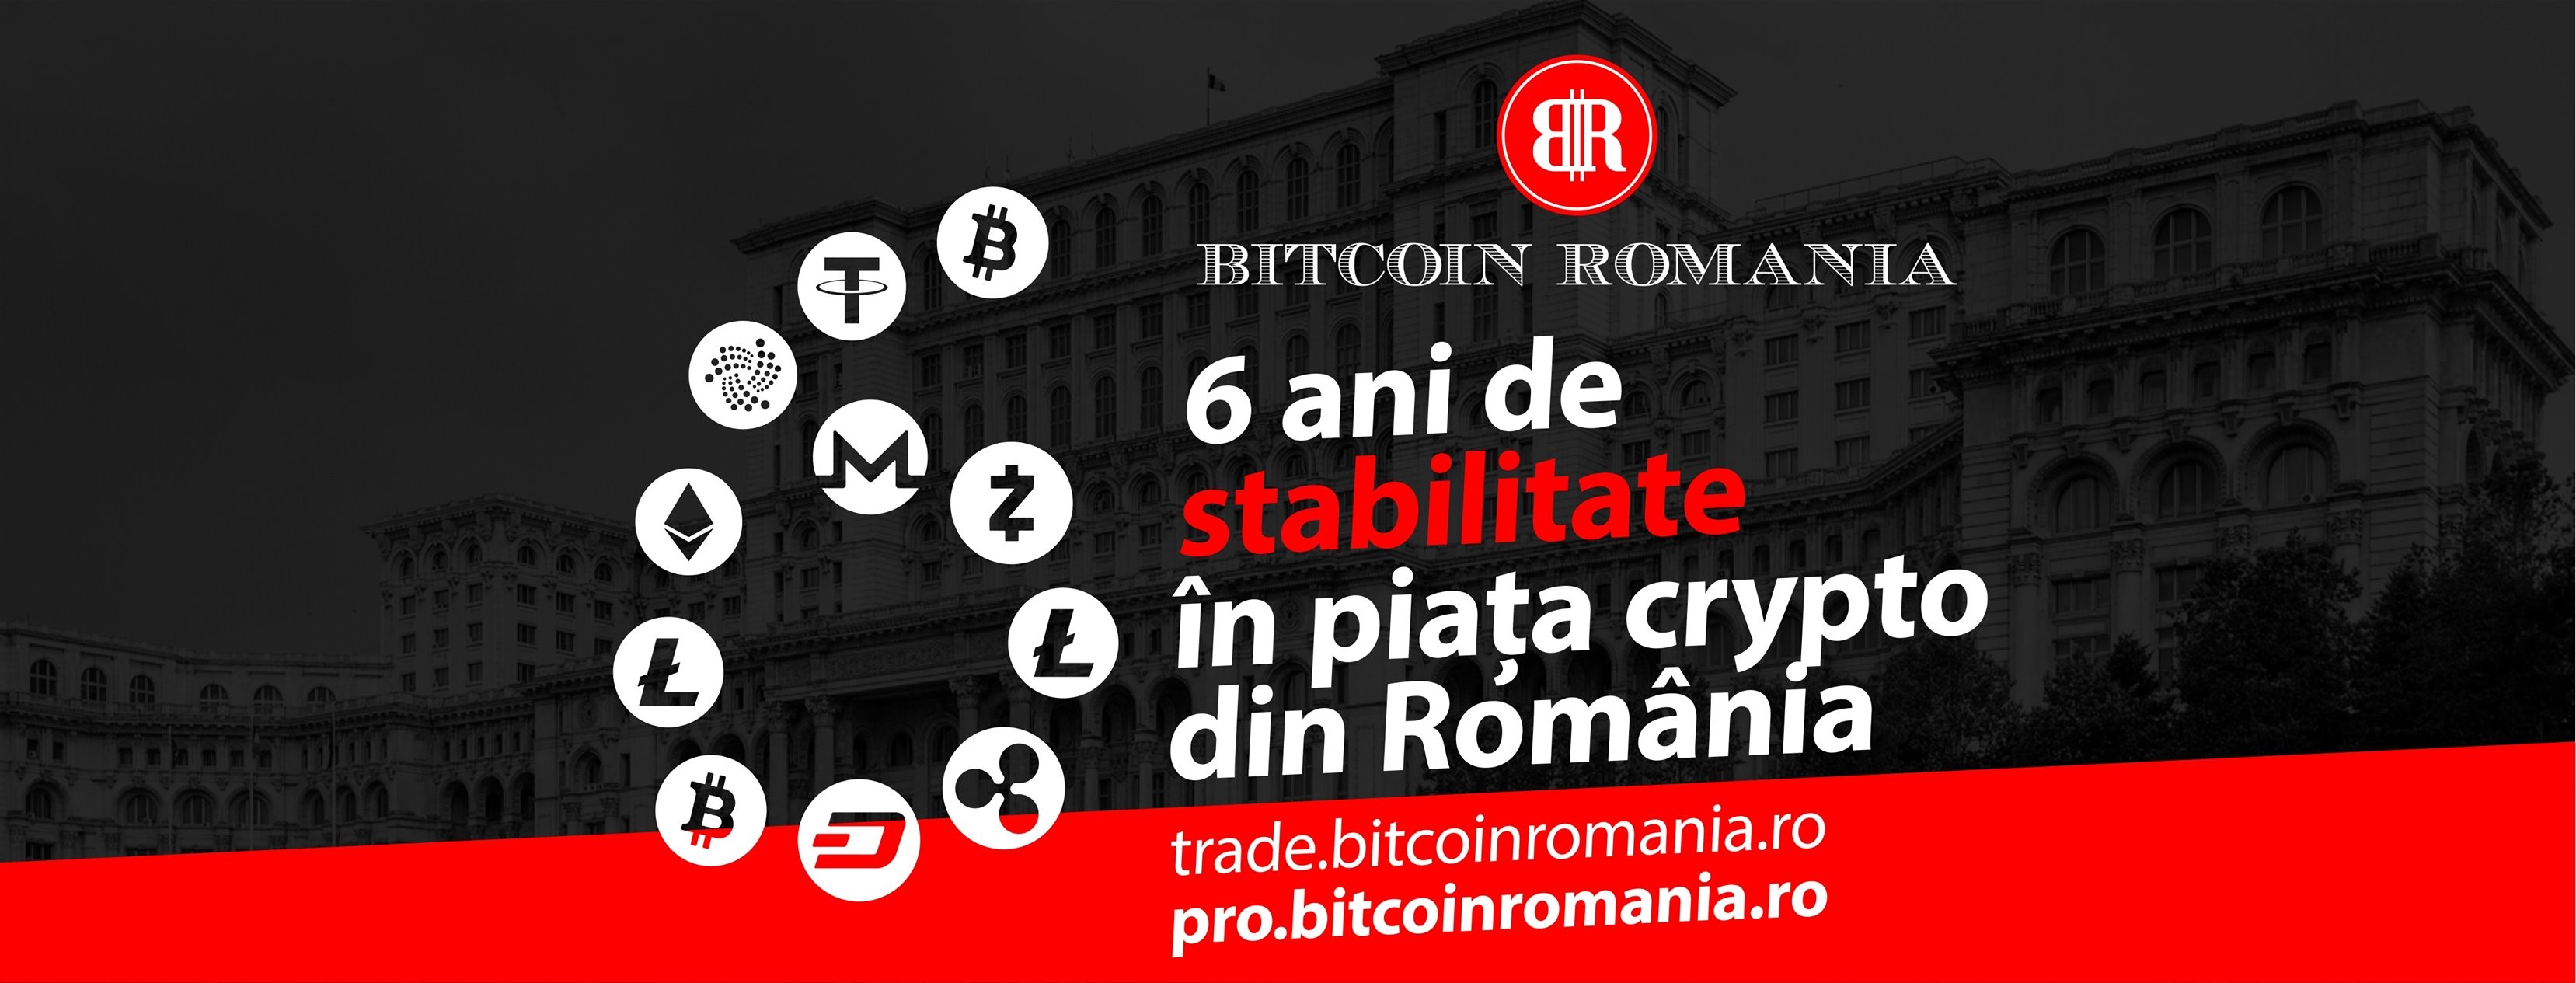 bitcoin trading románia